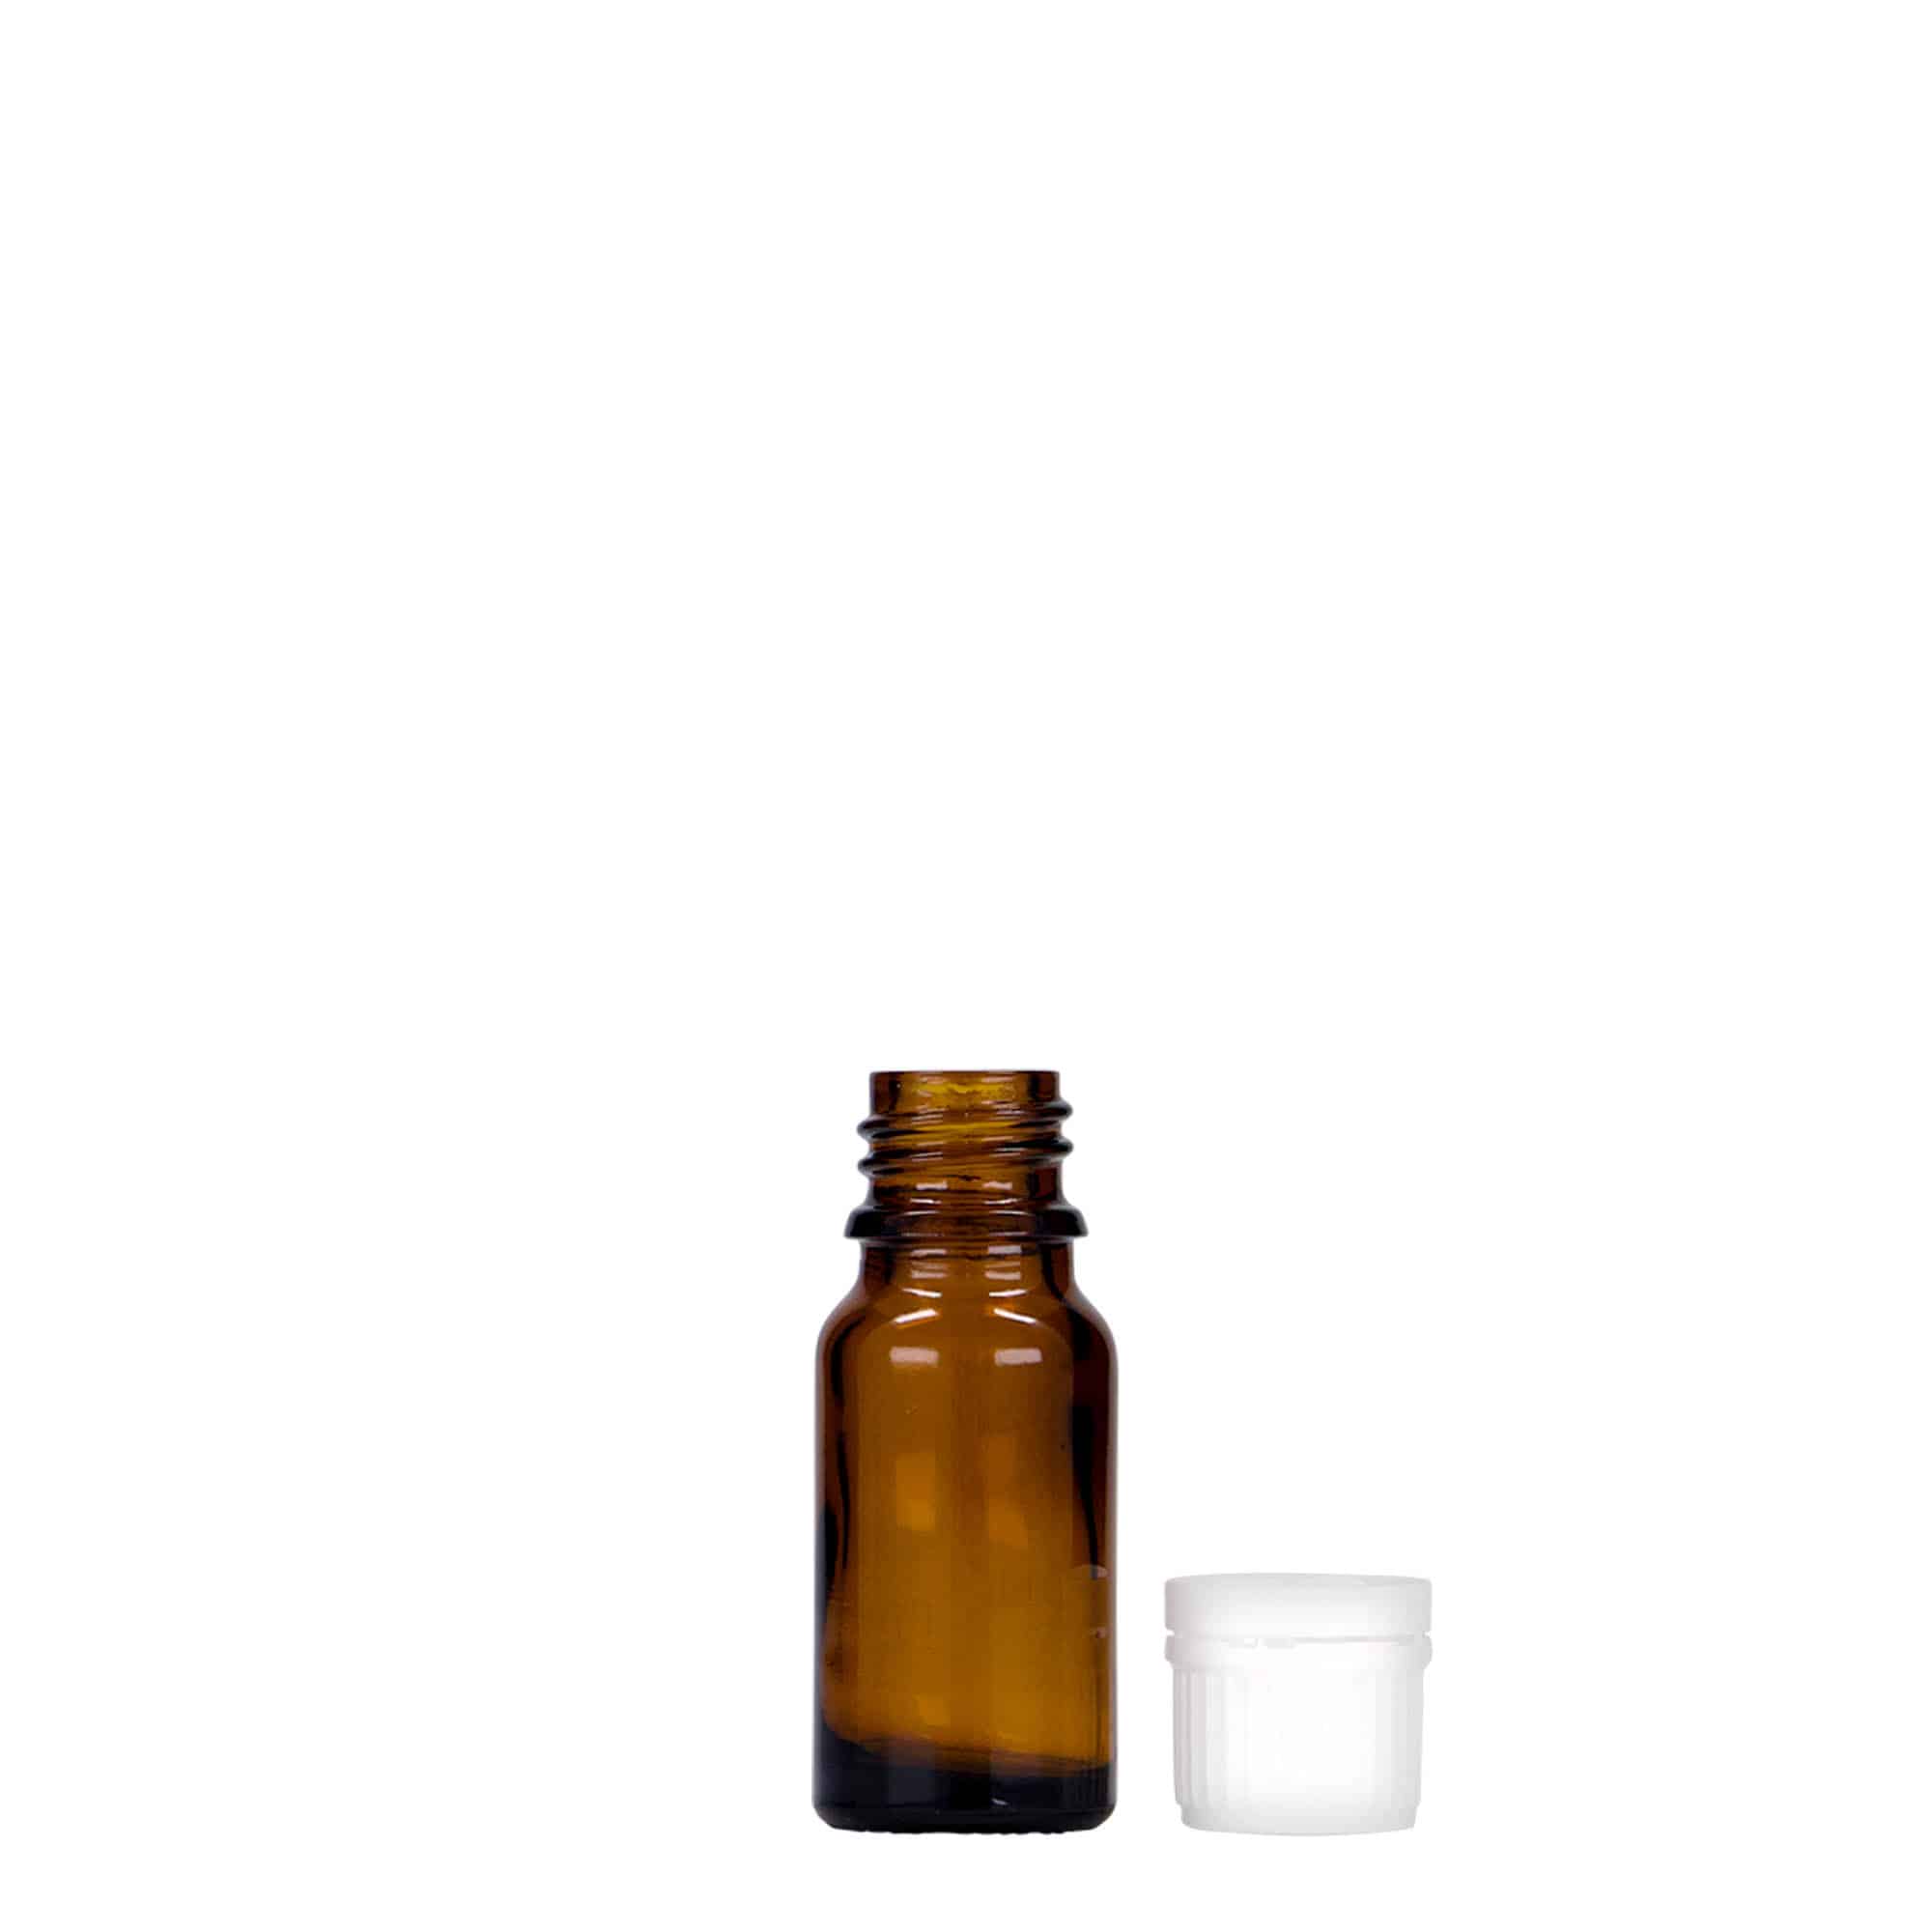 Lékovka 10 ml, sklo, hnědá, ústí: DIN 18